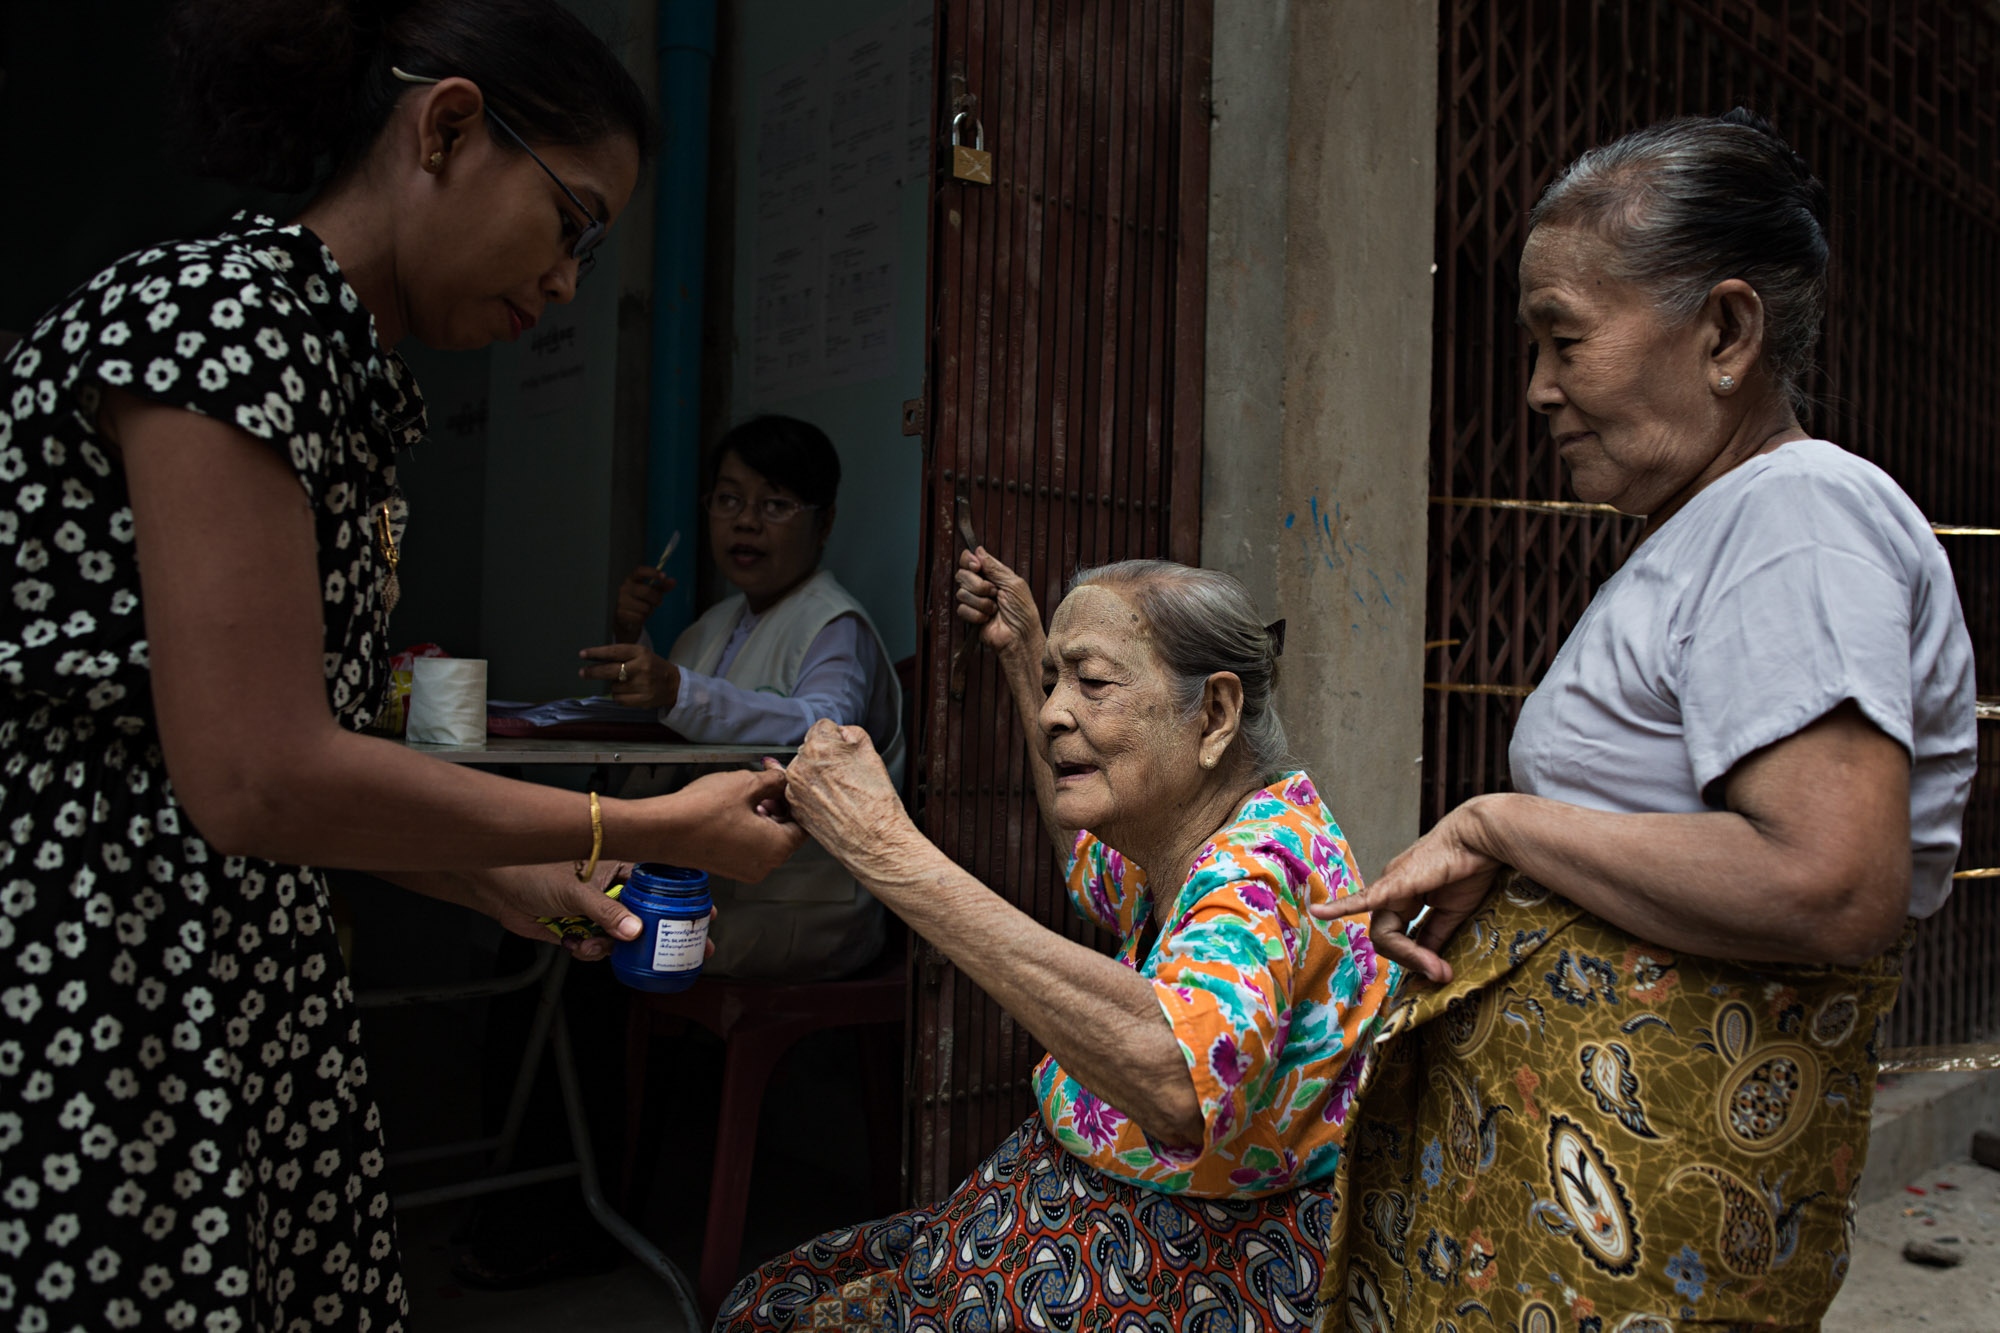 Myanmar Election: Al Jazeera - An elderly woman dips her finger into purple ink,...